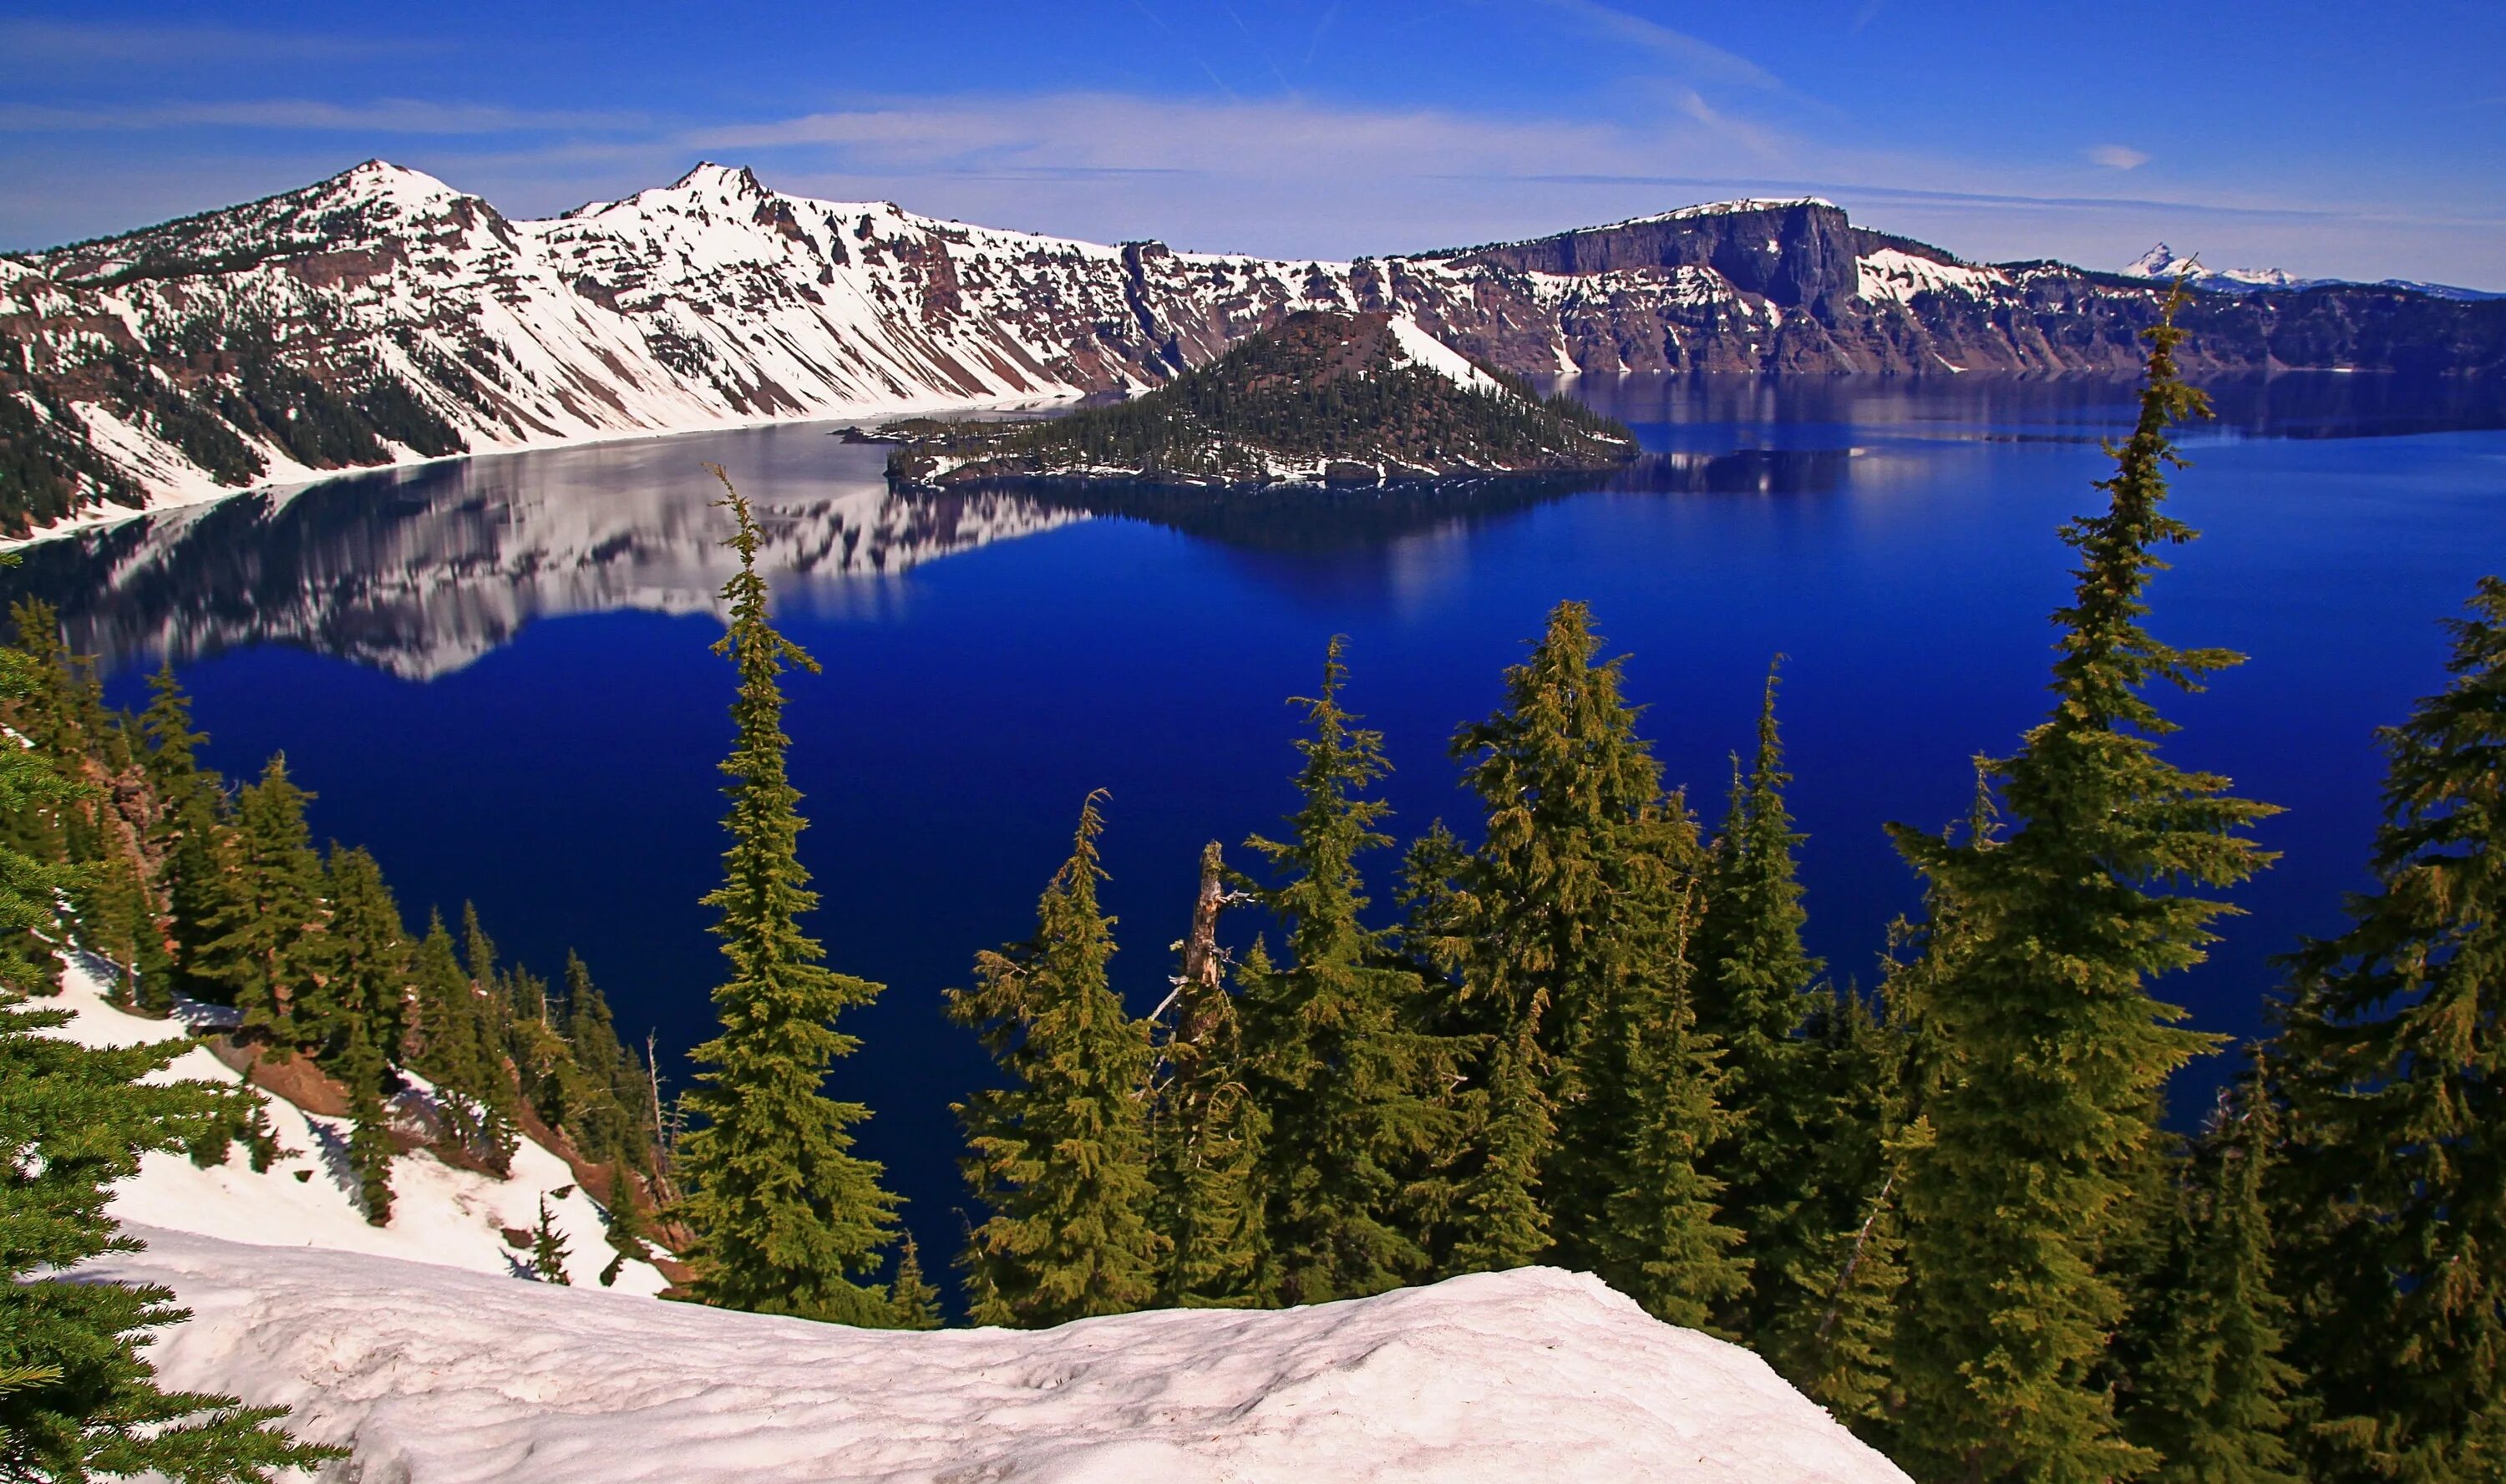 Какая страна известна озерами. Озеро Крейтер США. Озеро Крейтер, штат Орегон, США. Озеро Крейтер Орегон. США штат Орегон нац парк Крейтер-Лейк.